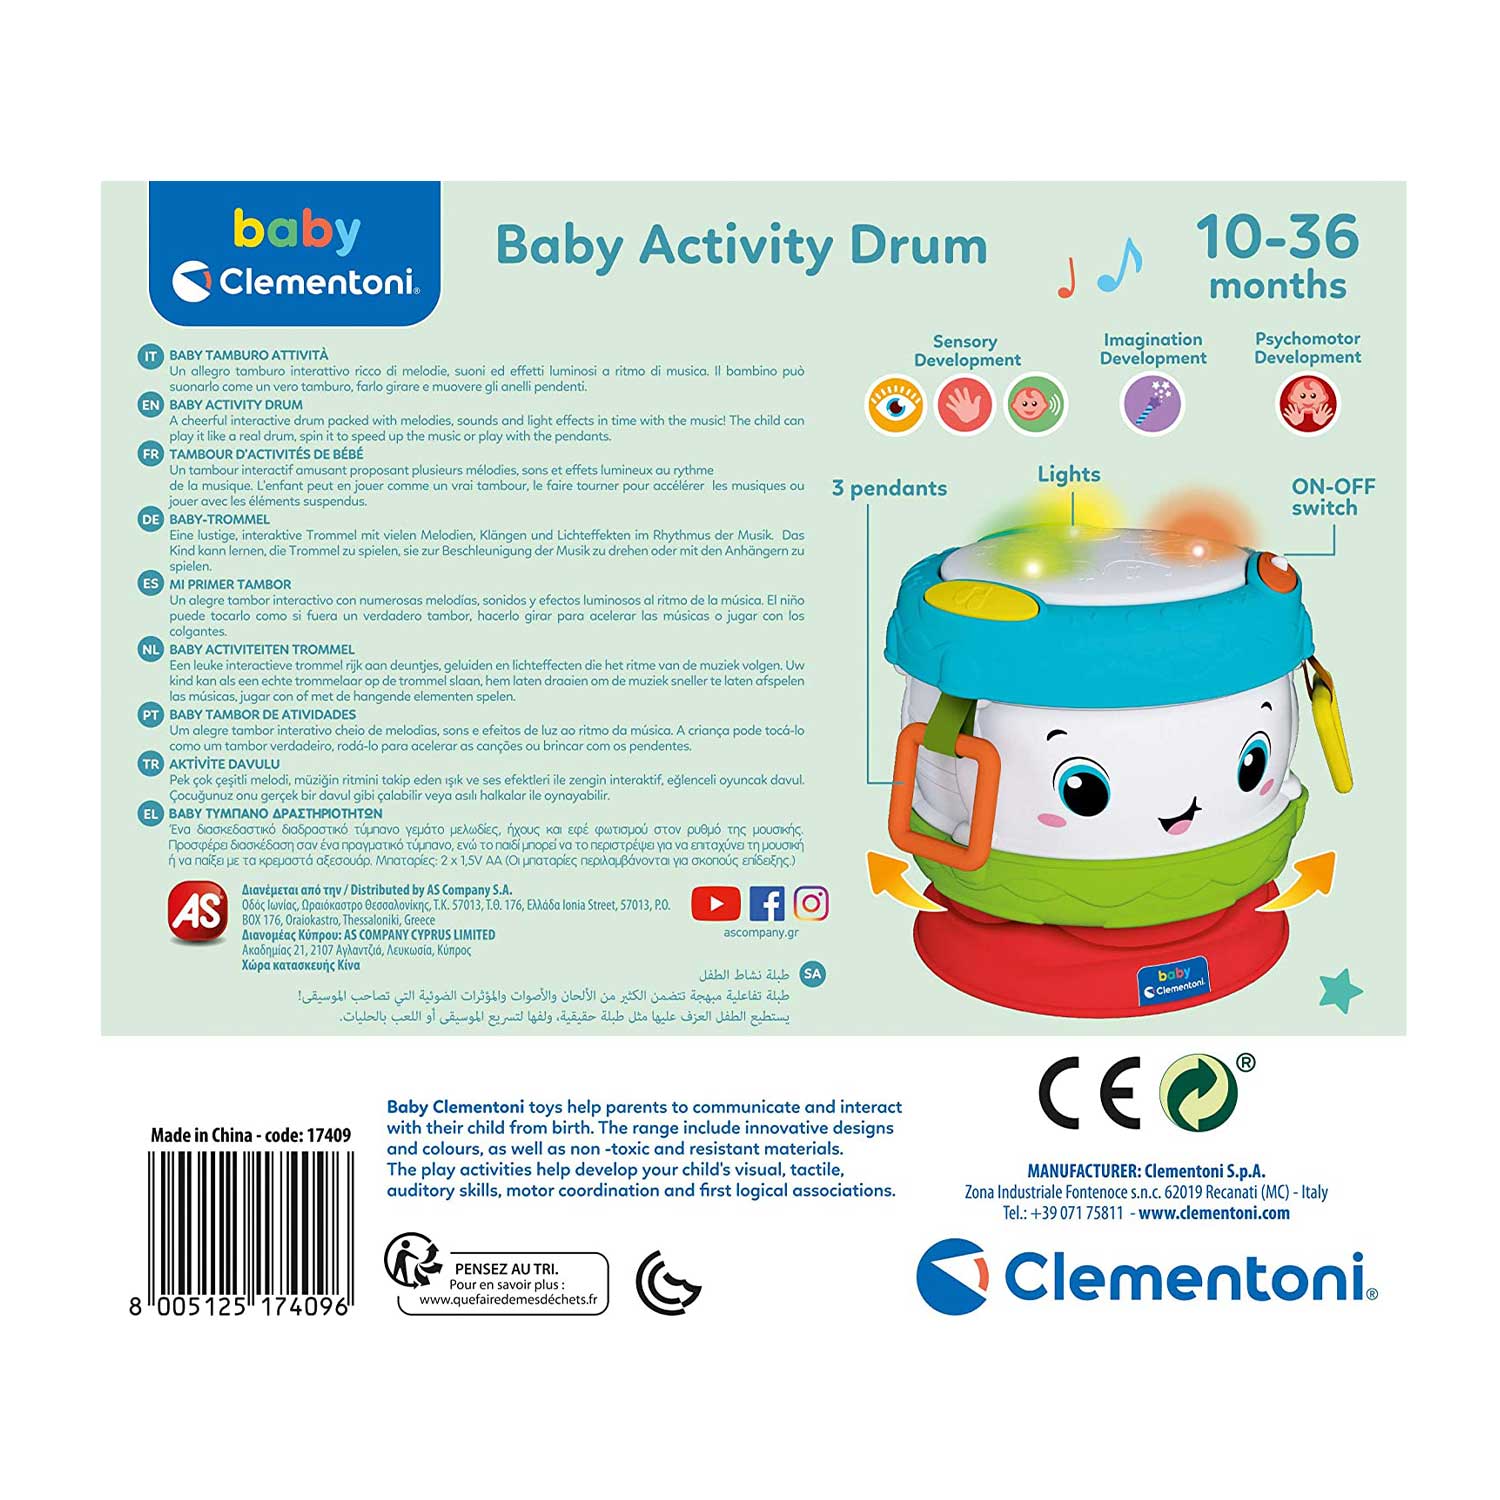 CLEMENTONI - Activity Baby Drum - Mod: CLM17409